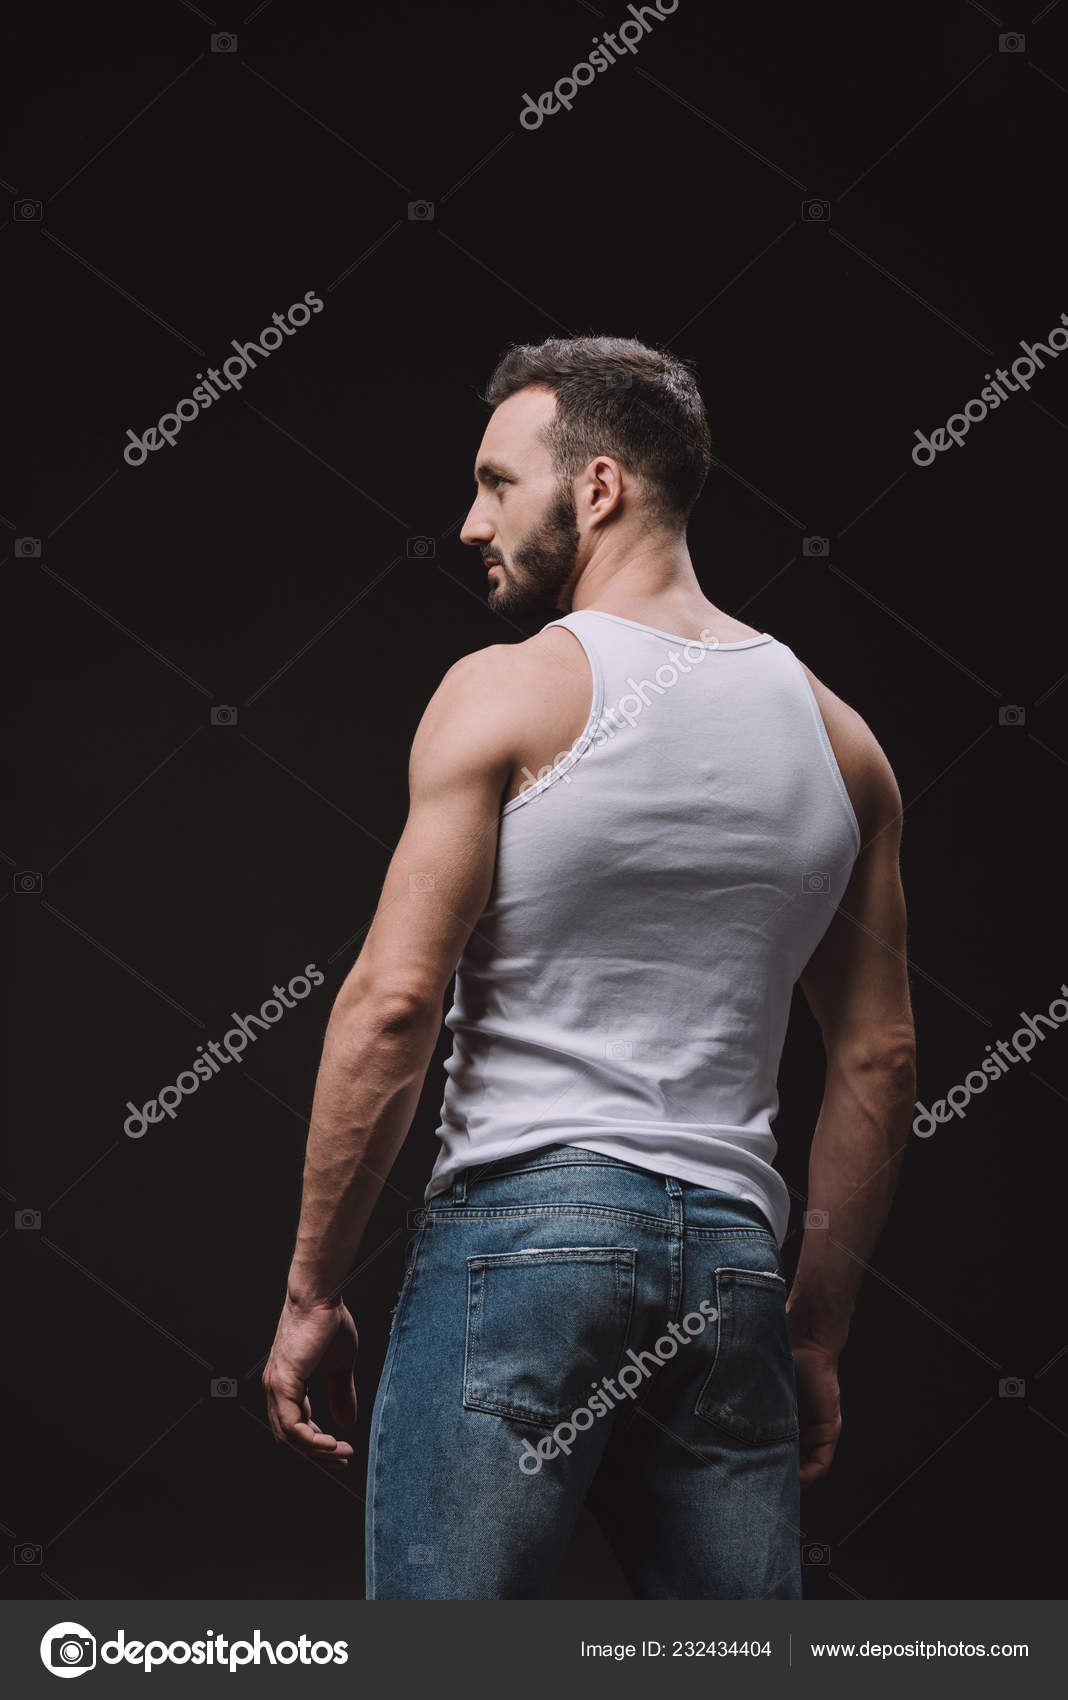 Indian Man Posing Back Muscular Body Stock Photo 1107482054 | Shutterstock